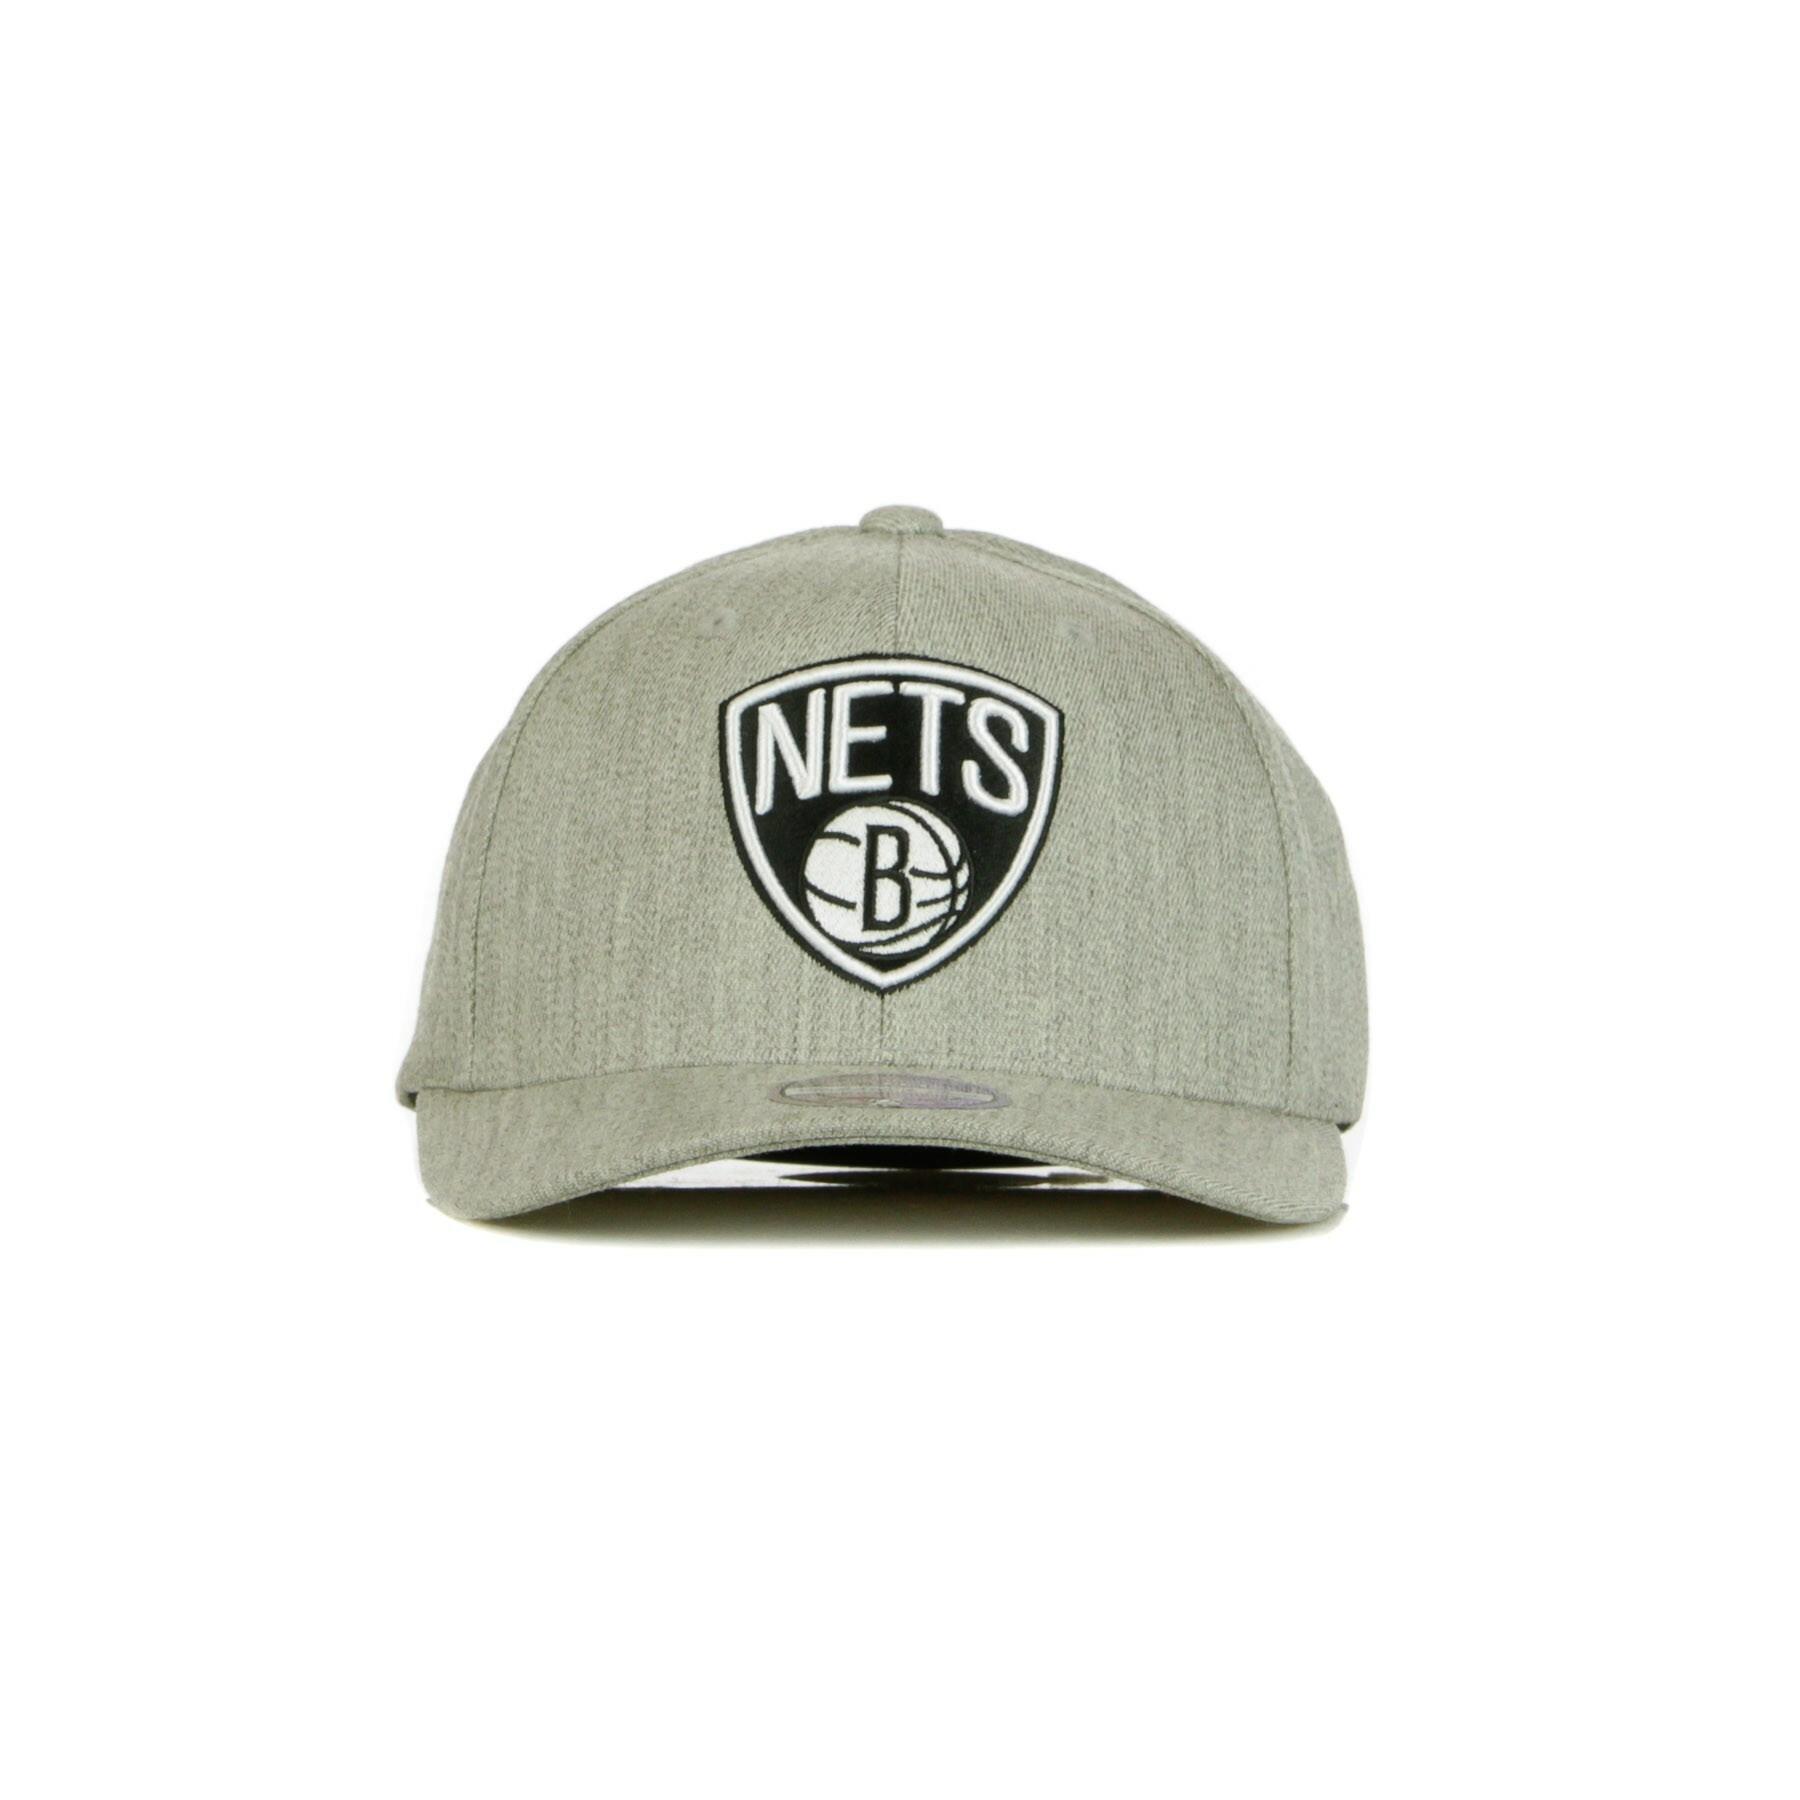 Cap Brooklyn Nets blk/wht logo 110